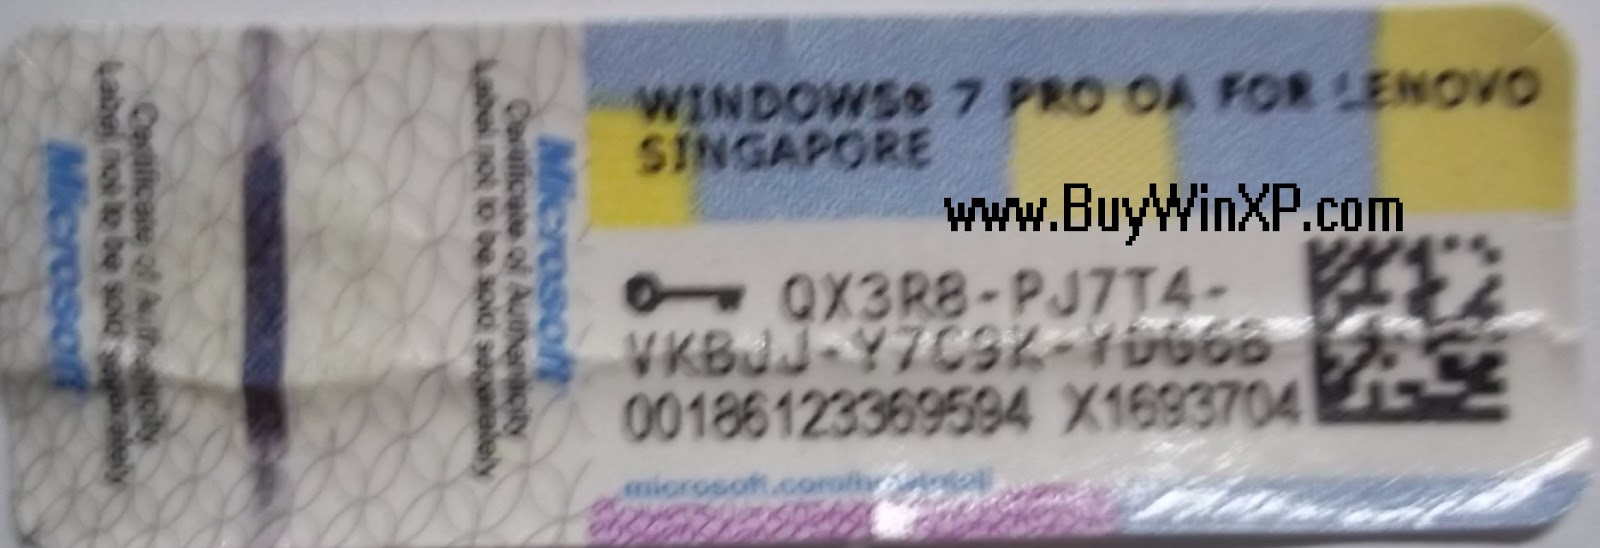 Windows 7 Pro 32 Serial Key